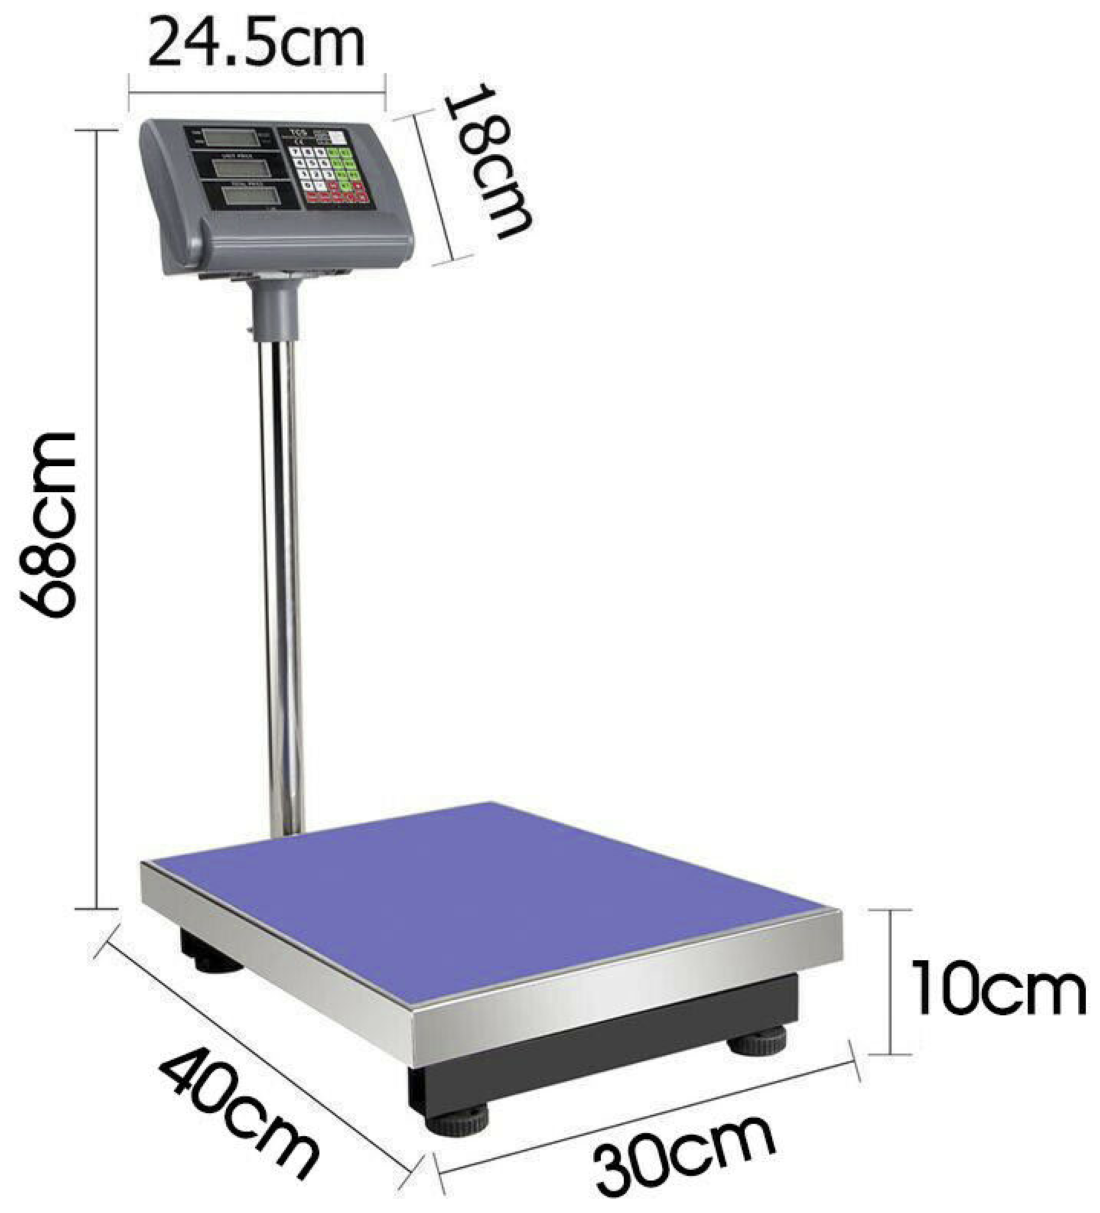 Electronic Computing Digital Platform Floor Scales Weighing 300kg x 50g LCD